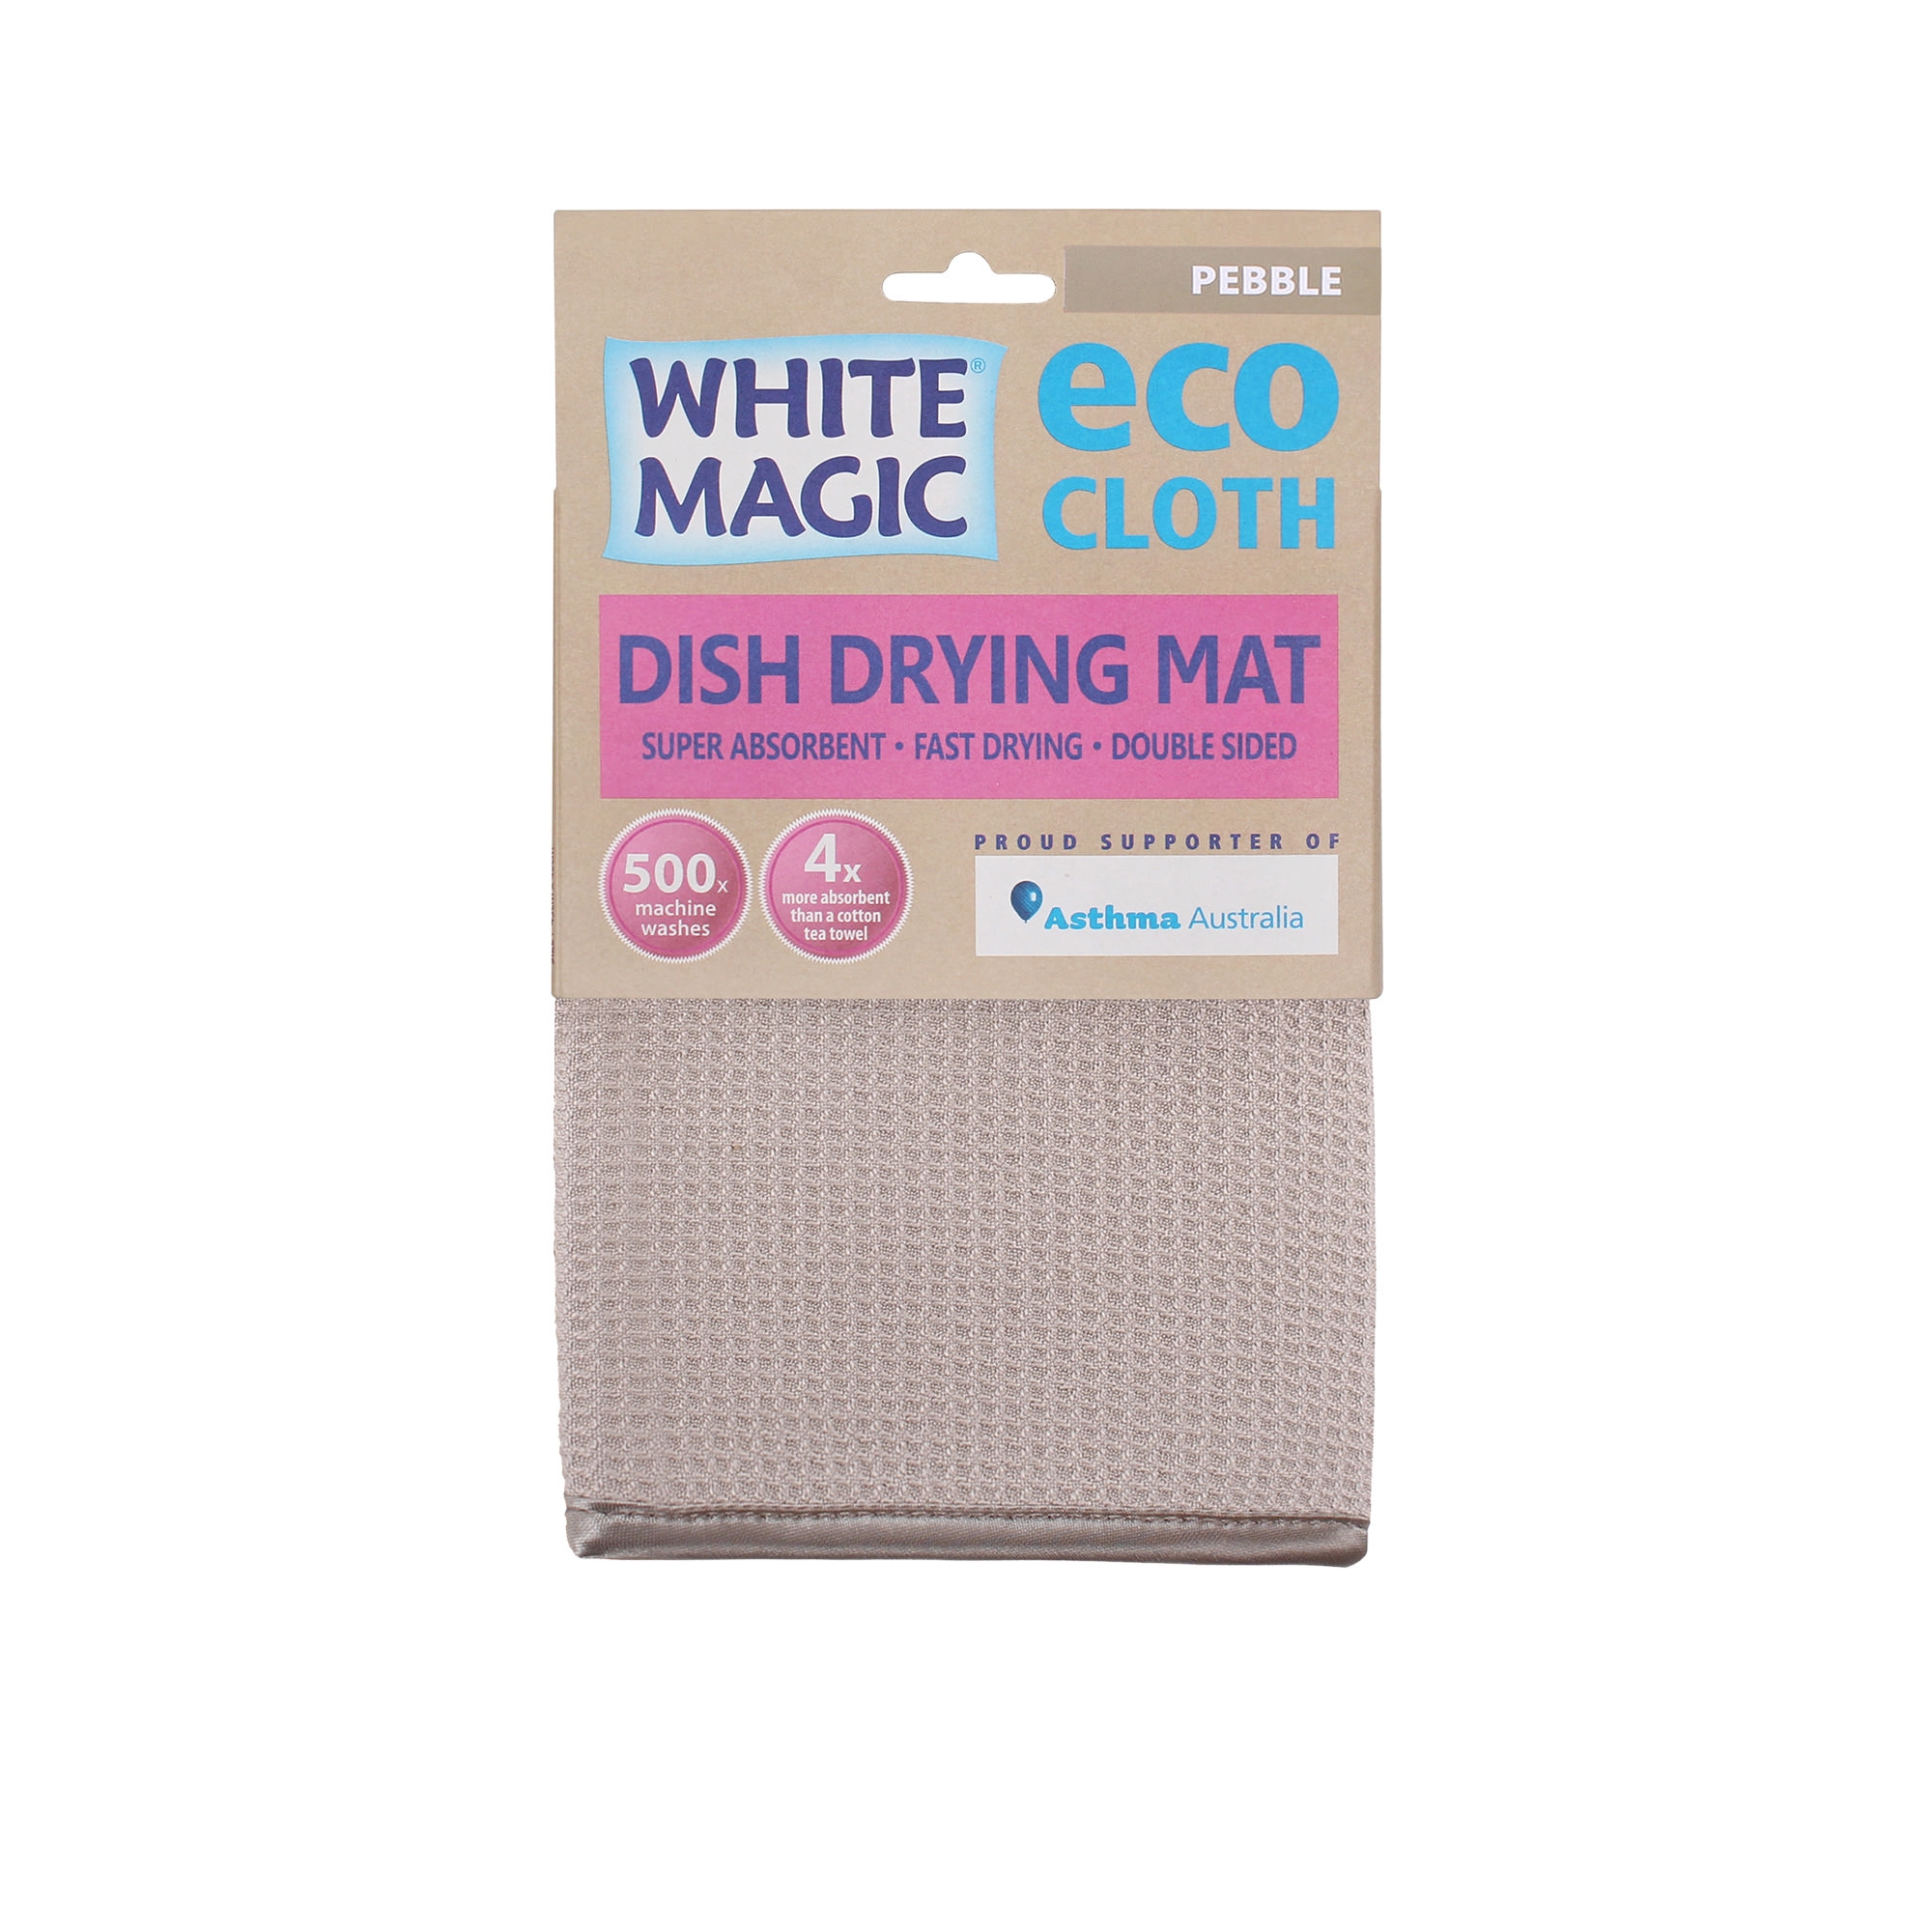 White Magic Eco Cloth Dish Drying Mat Pebble Image 1